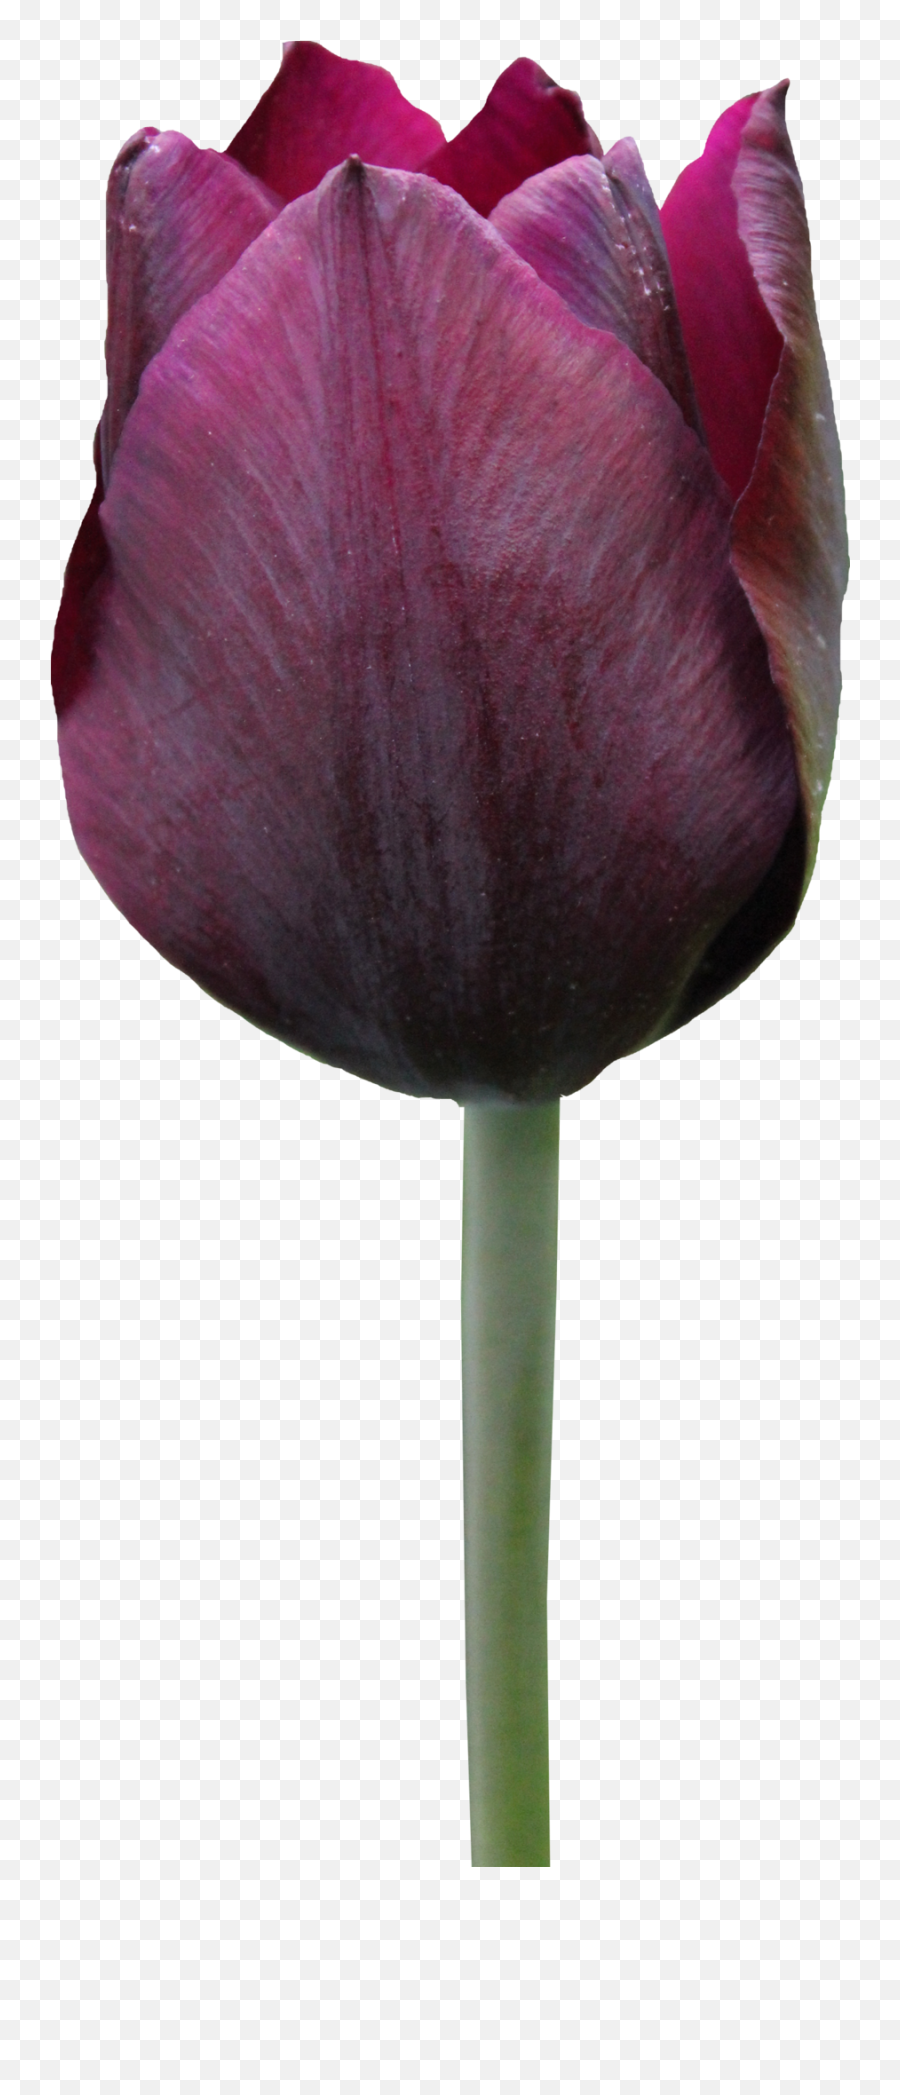 Tulip Png Free Download - Free Tulip,Tulip Png